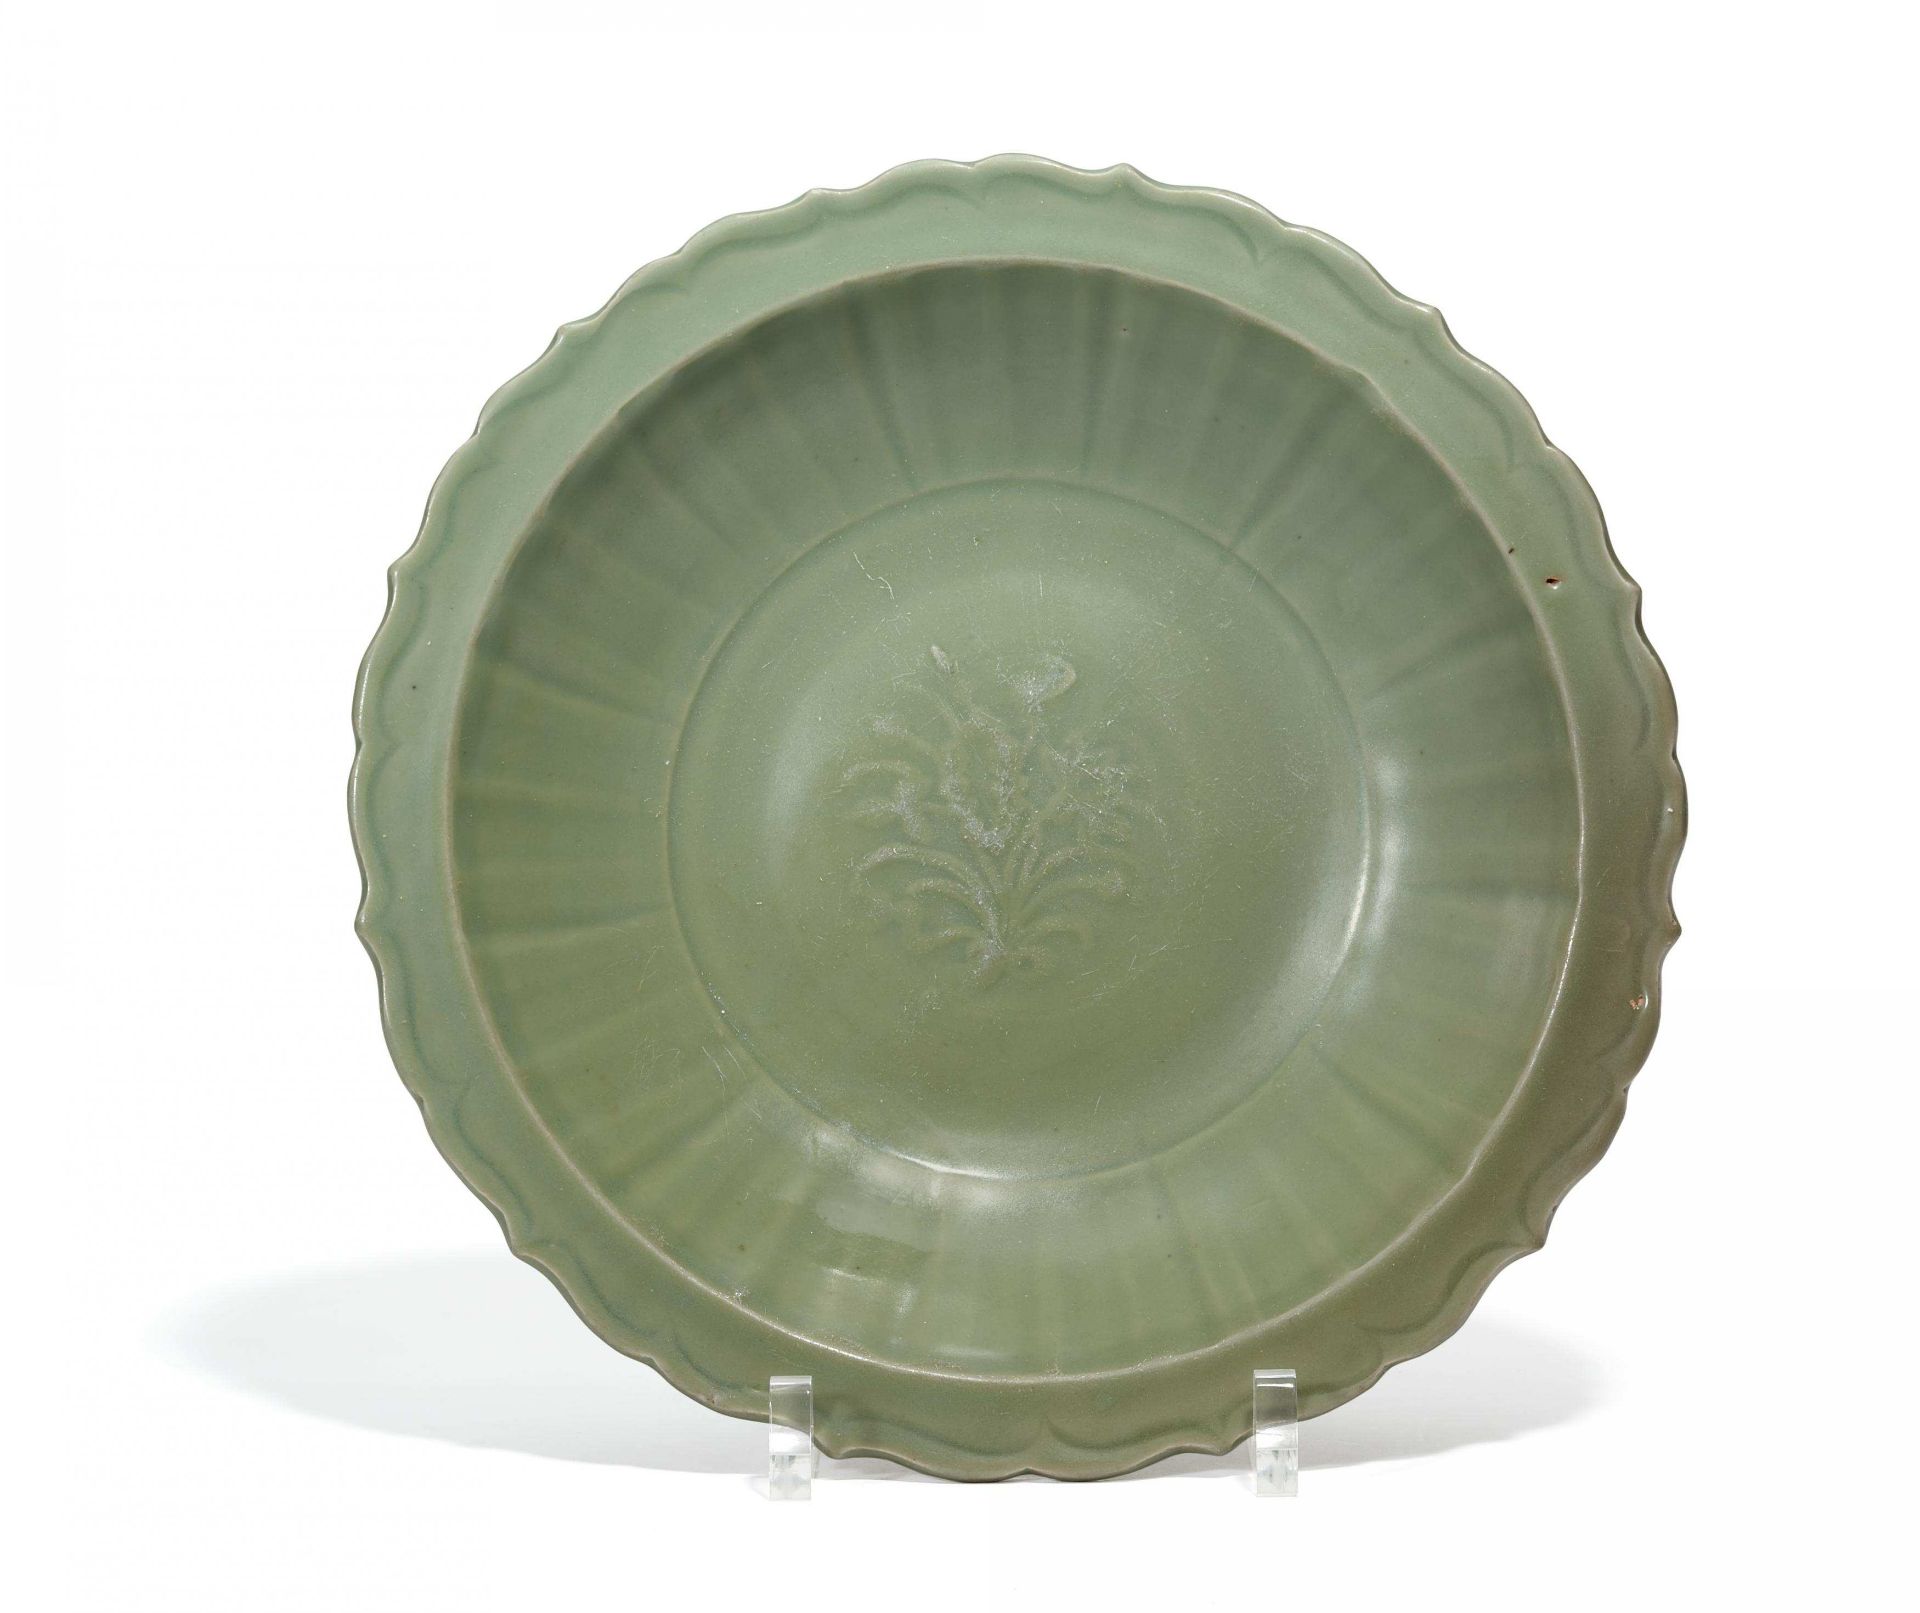 BIG SELADON PLATE. China. Longquan. Ming dynasty. 14th/15th c. Porcelain with green Seladon glaze,